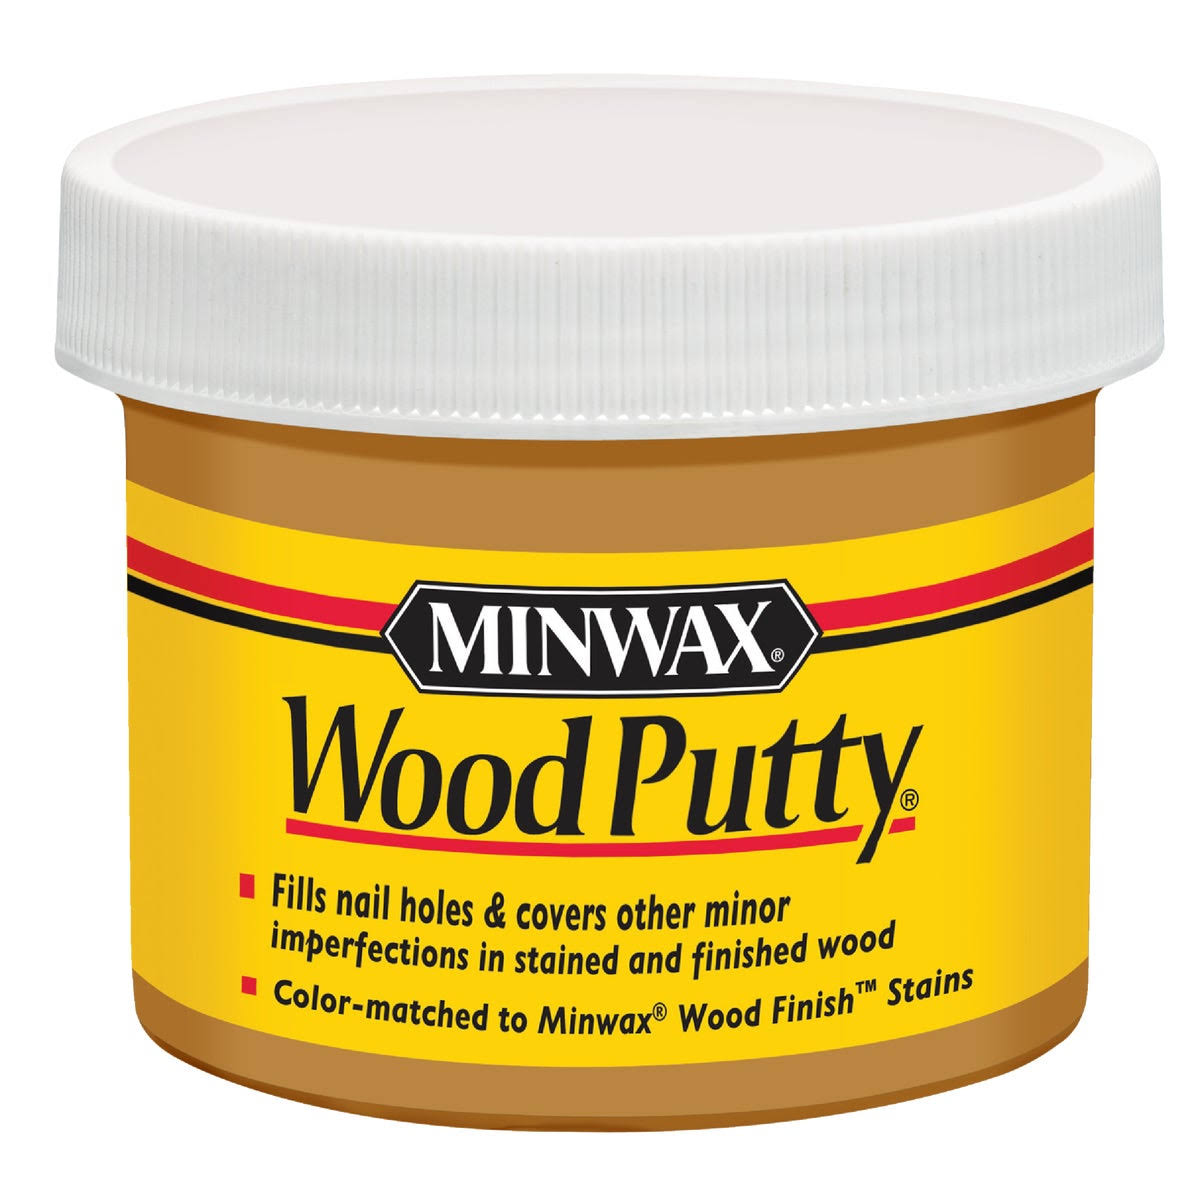 Minwax Wood Putty - 3.75oz, Golden Oak